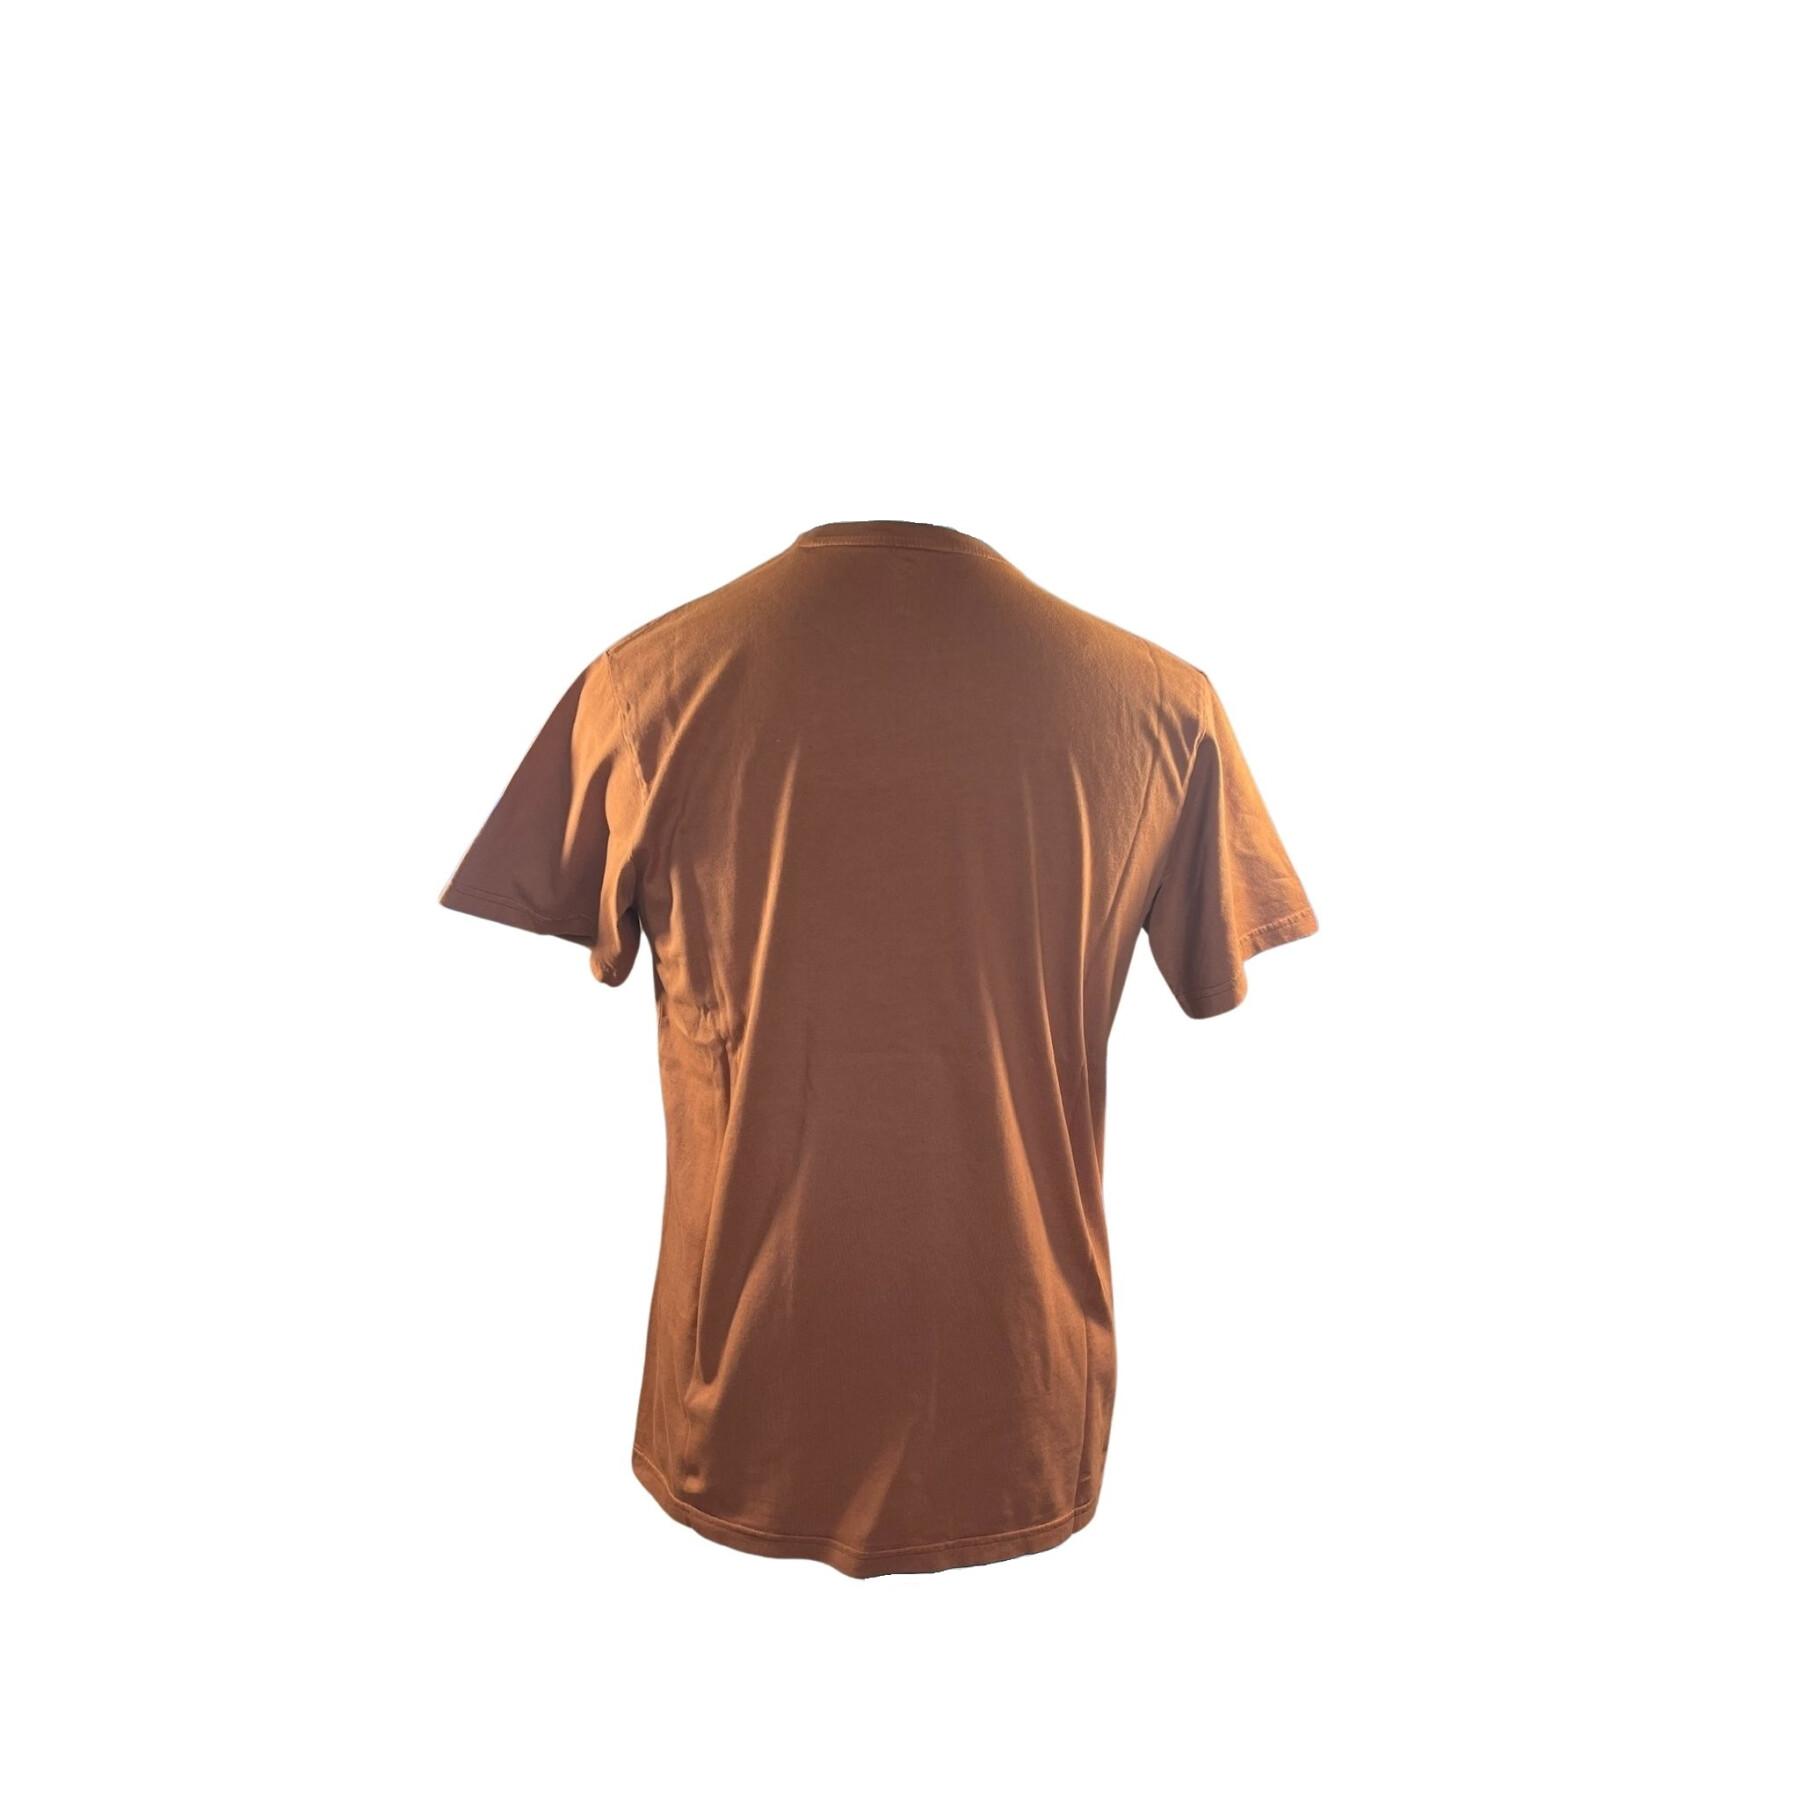 T-Shirt aus Bio-Baumwolle Colorful Standard